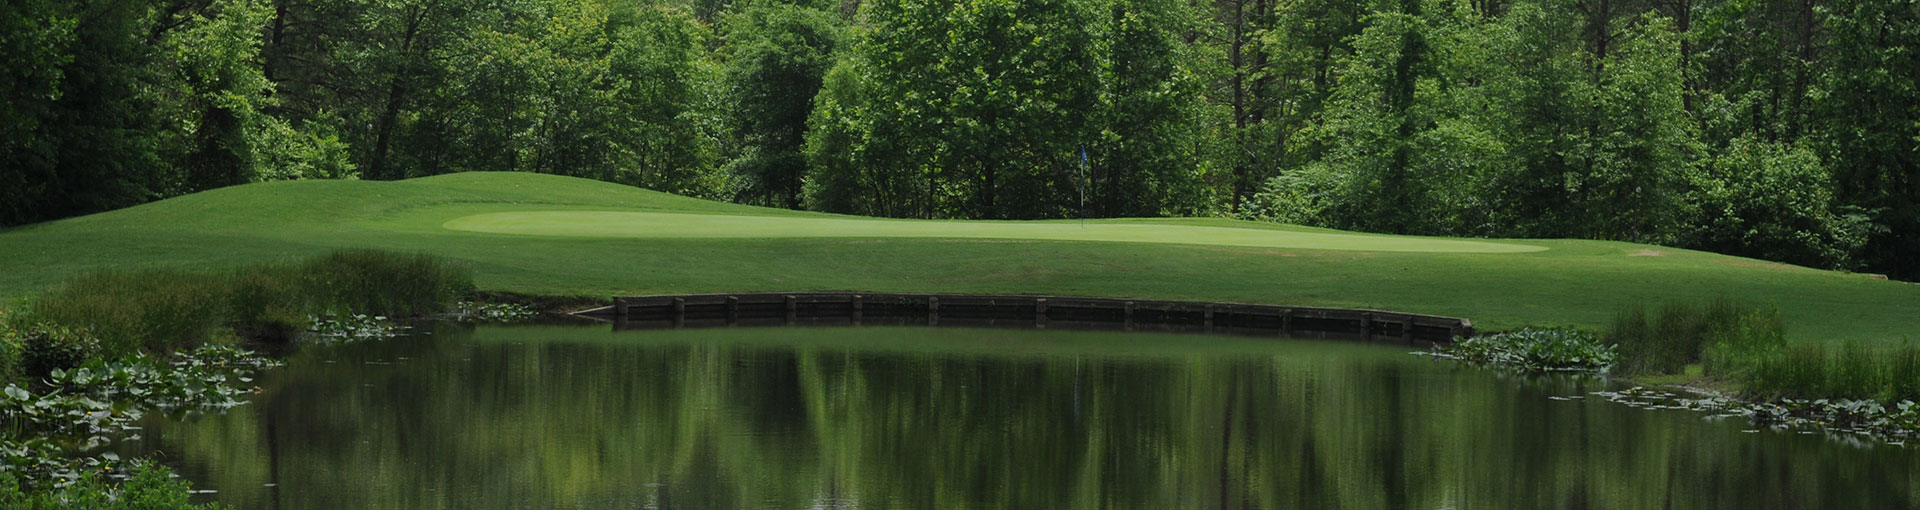 Lee's Hill Golf Club - Fredericksburg, VA